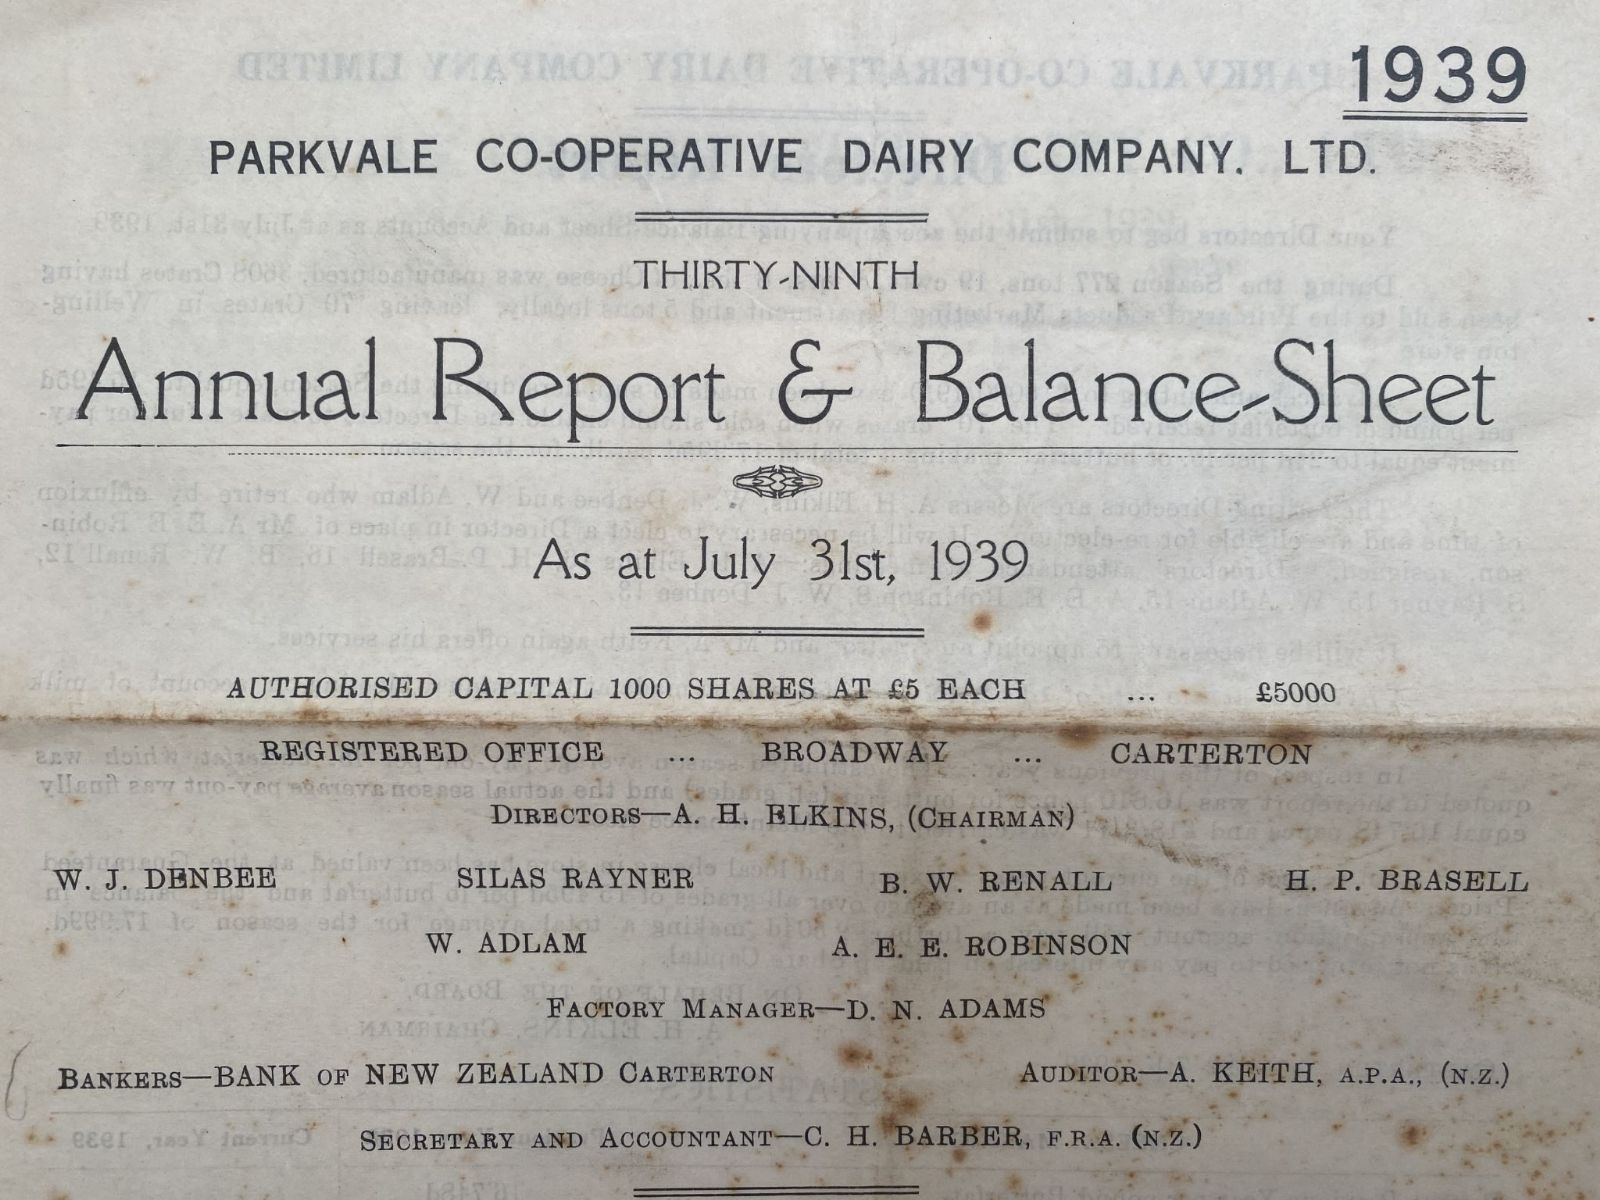 PARKVALE CO-OPERATIVE DAIRY CO. Ltd, Carterton - Annual Report 1939